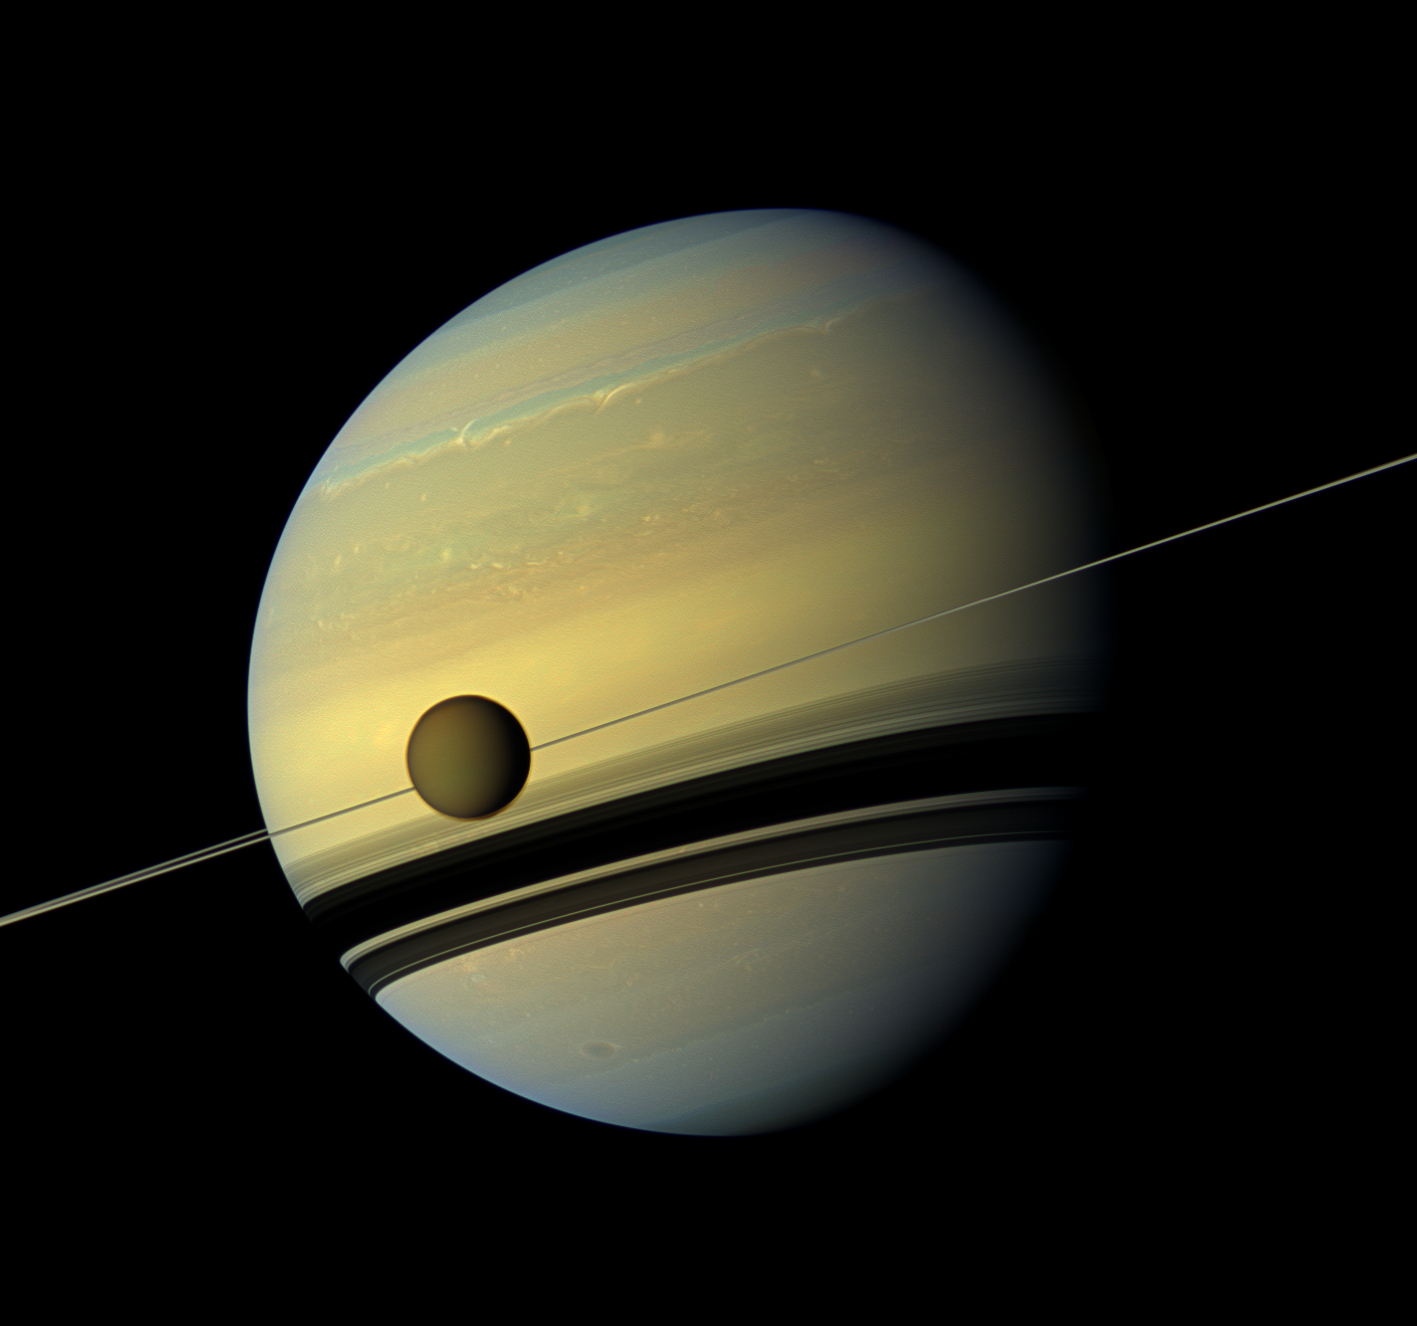 Titan orbiting Saturn